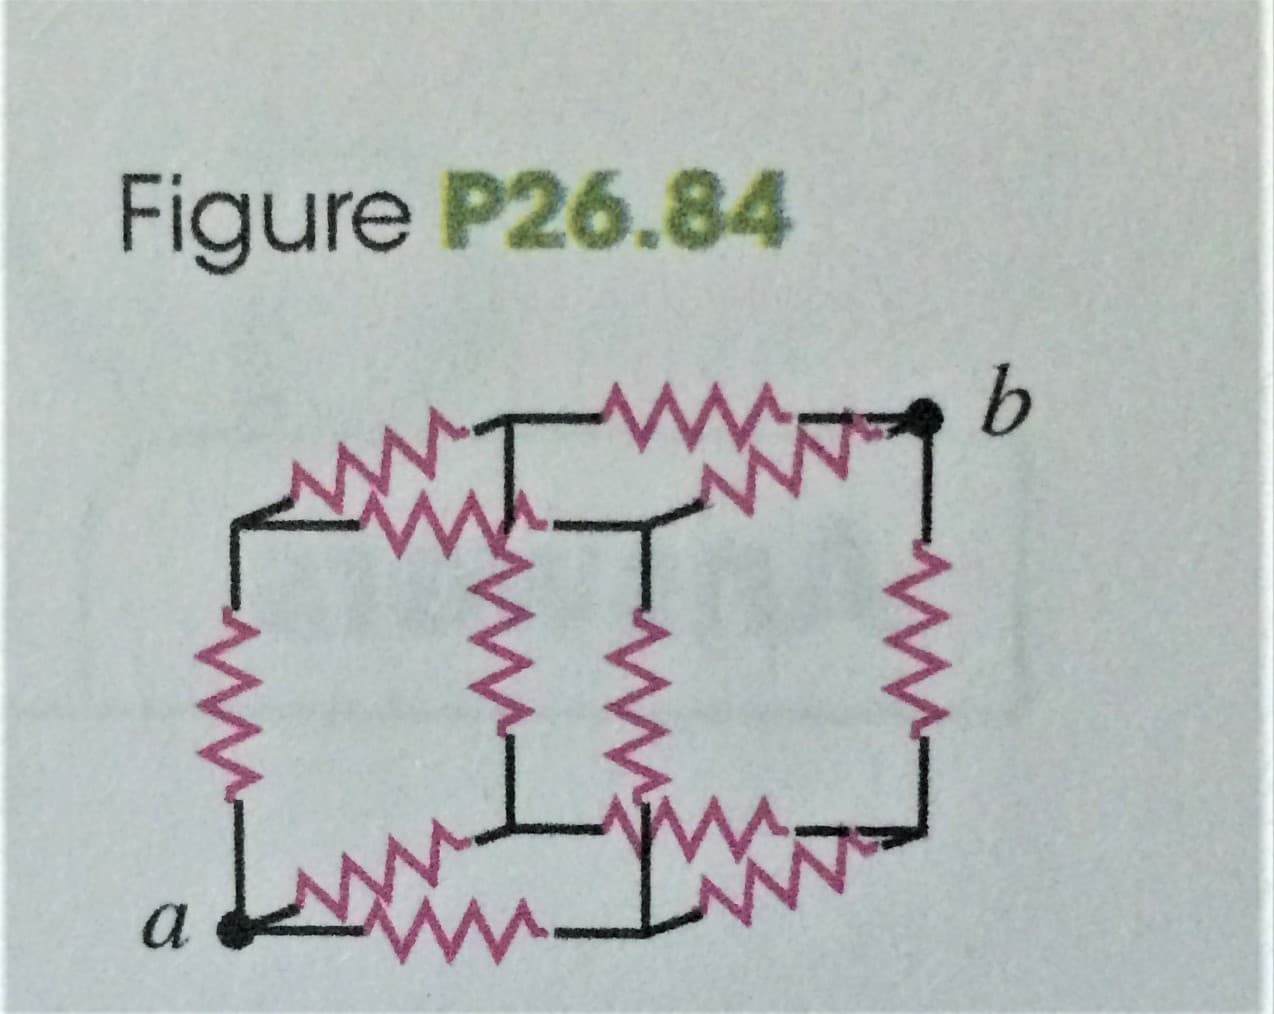 Figure P26.84
b
a
